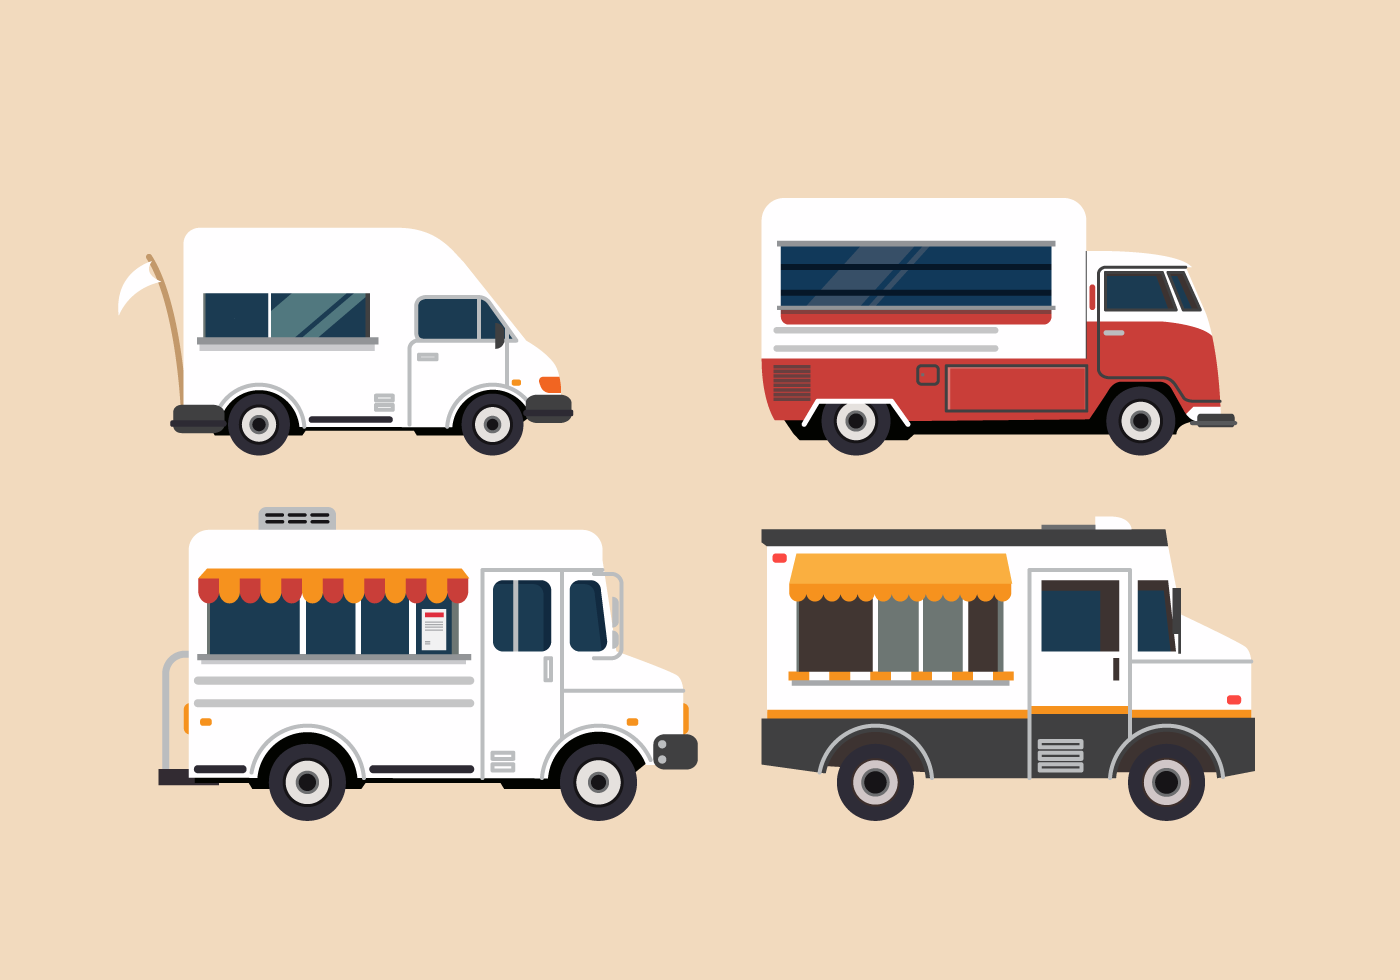 Free Vector Food Truck Illustration Set - Download Free ...